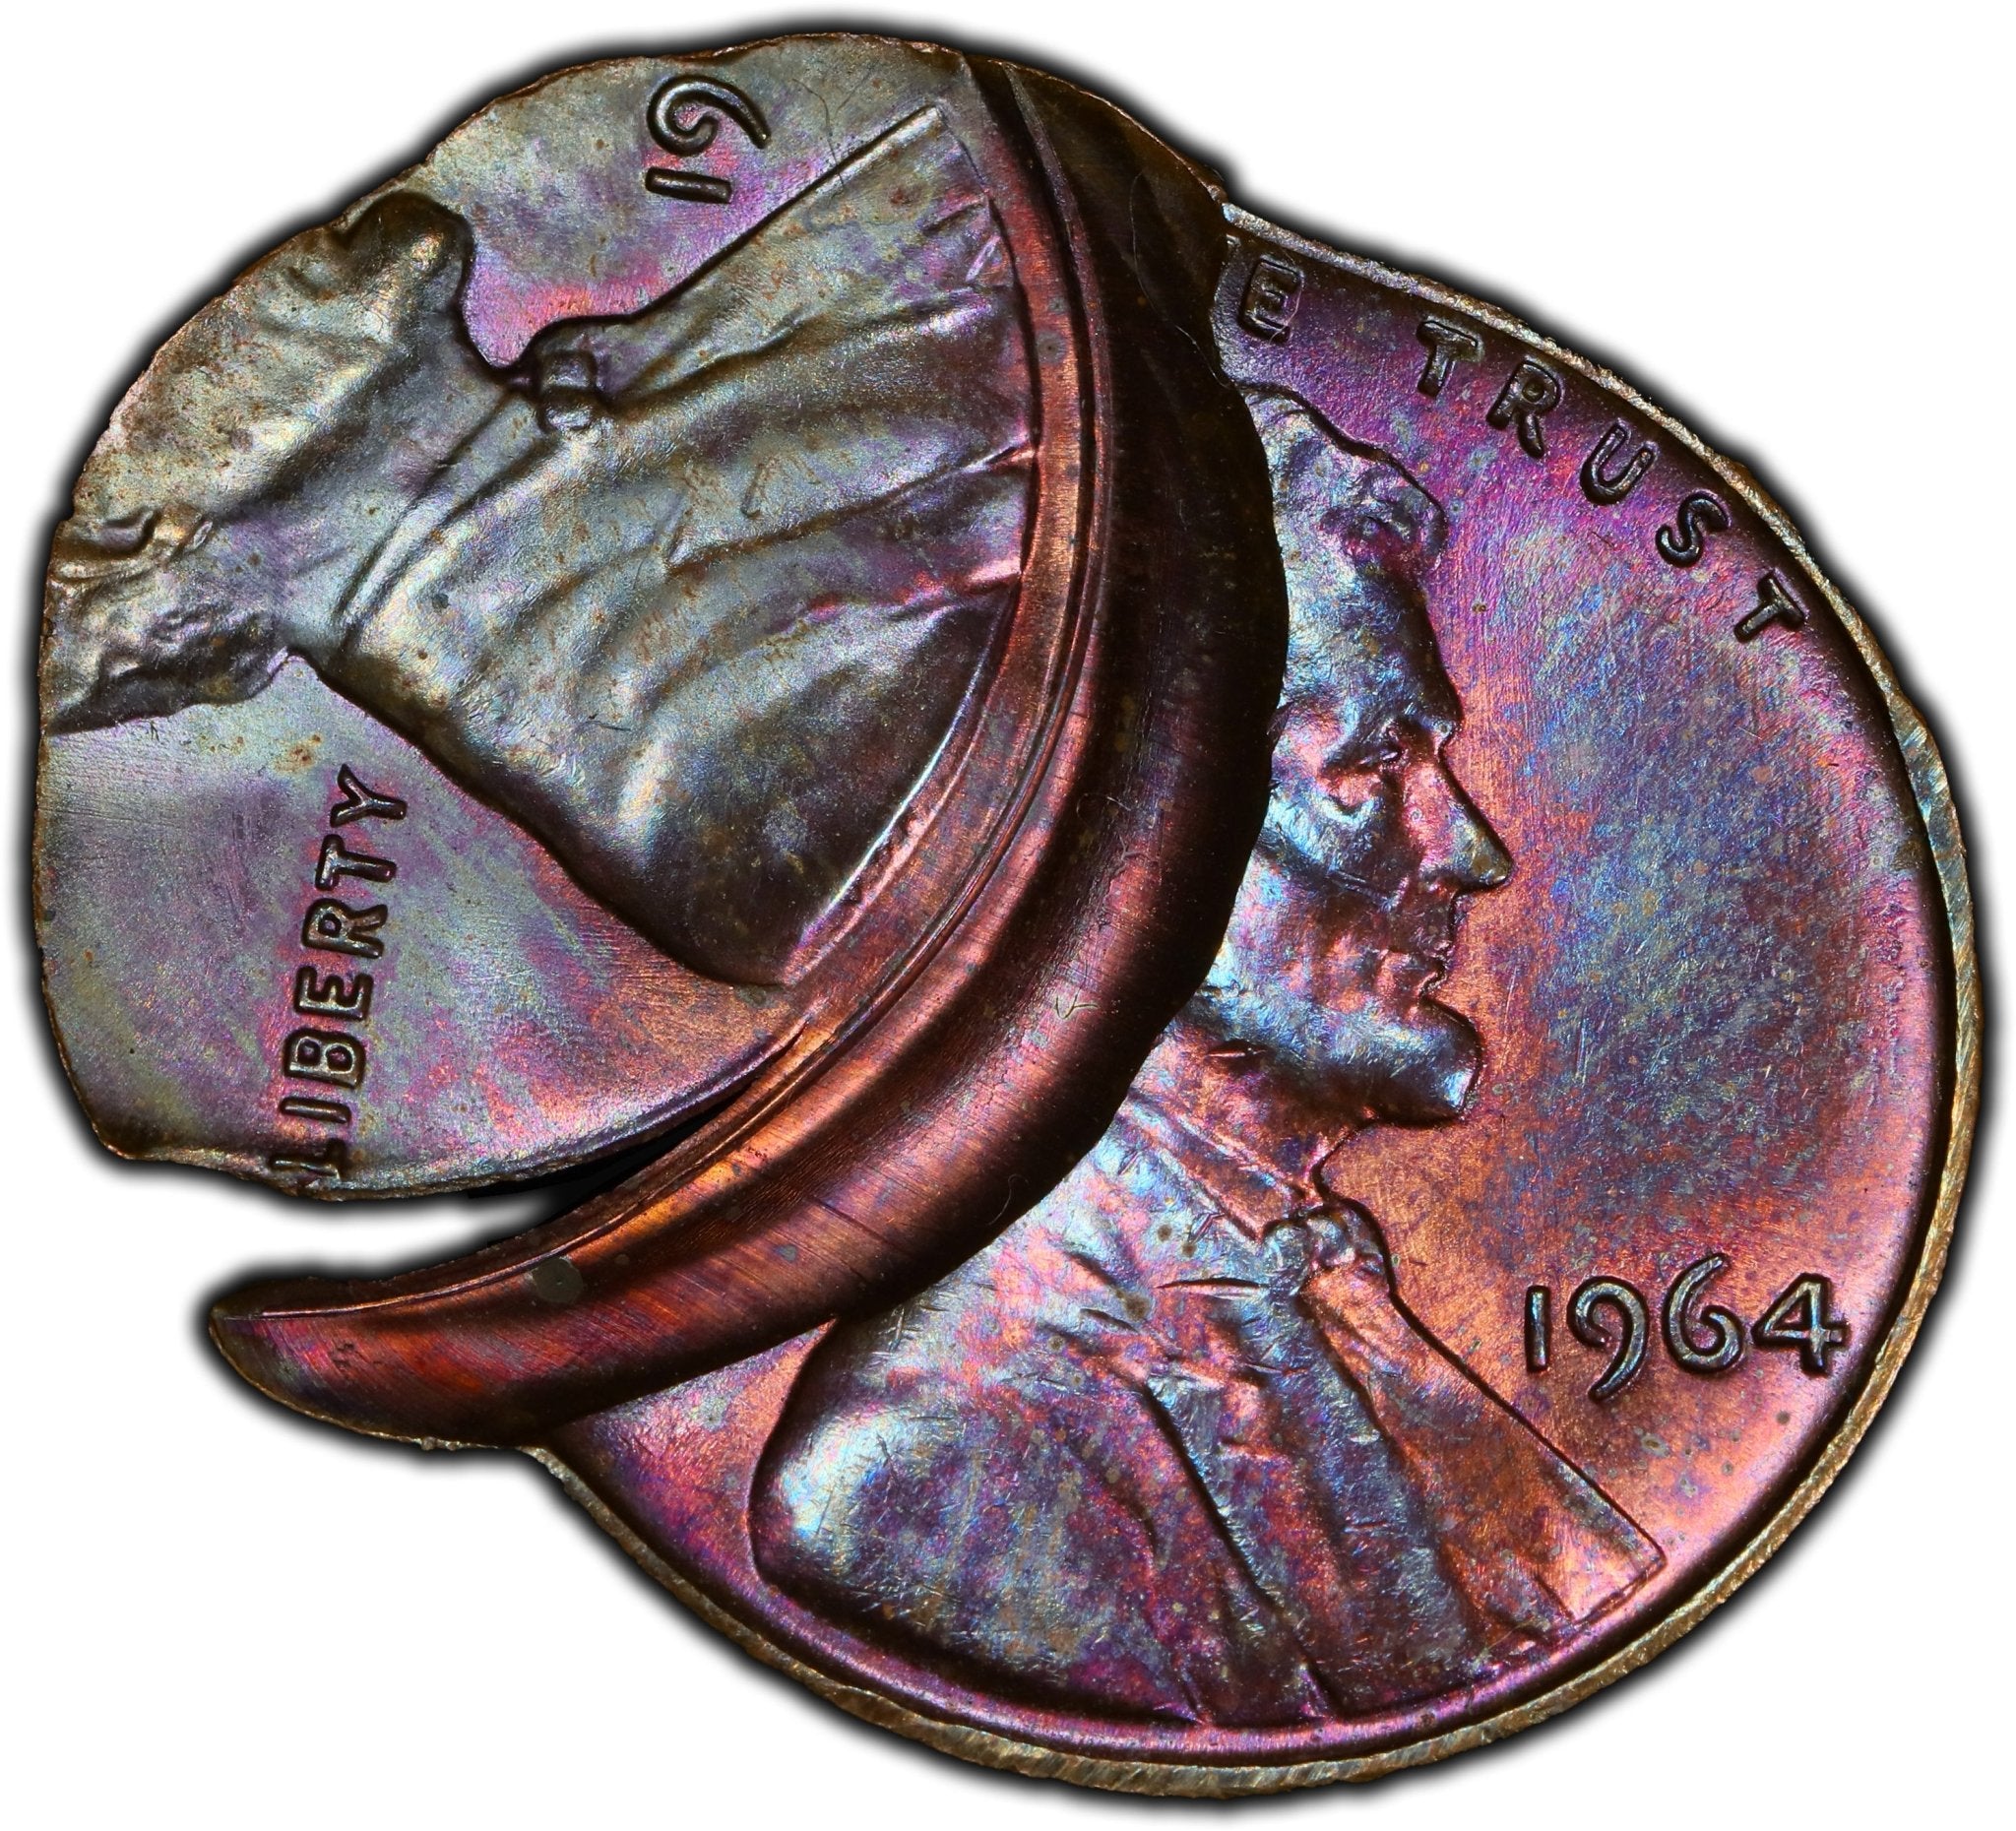 1964 1C D/S-2ND STRIKE 60 PERCENT OFF-CENTER MS64 BN PCGS ERROR - Paradime Coins | PCGS NGC CACG CAC Rare US Numismatic Coins For Sale